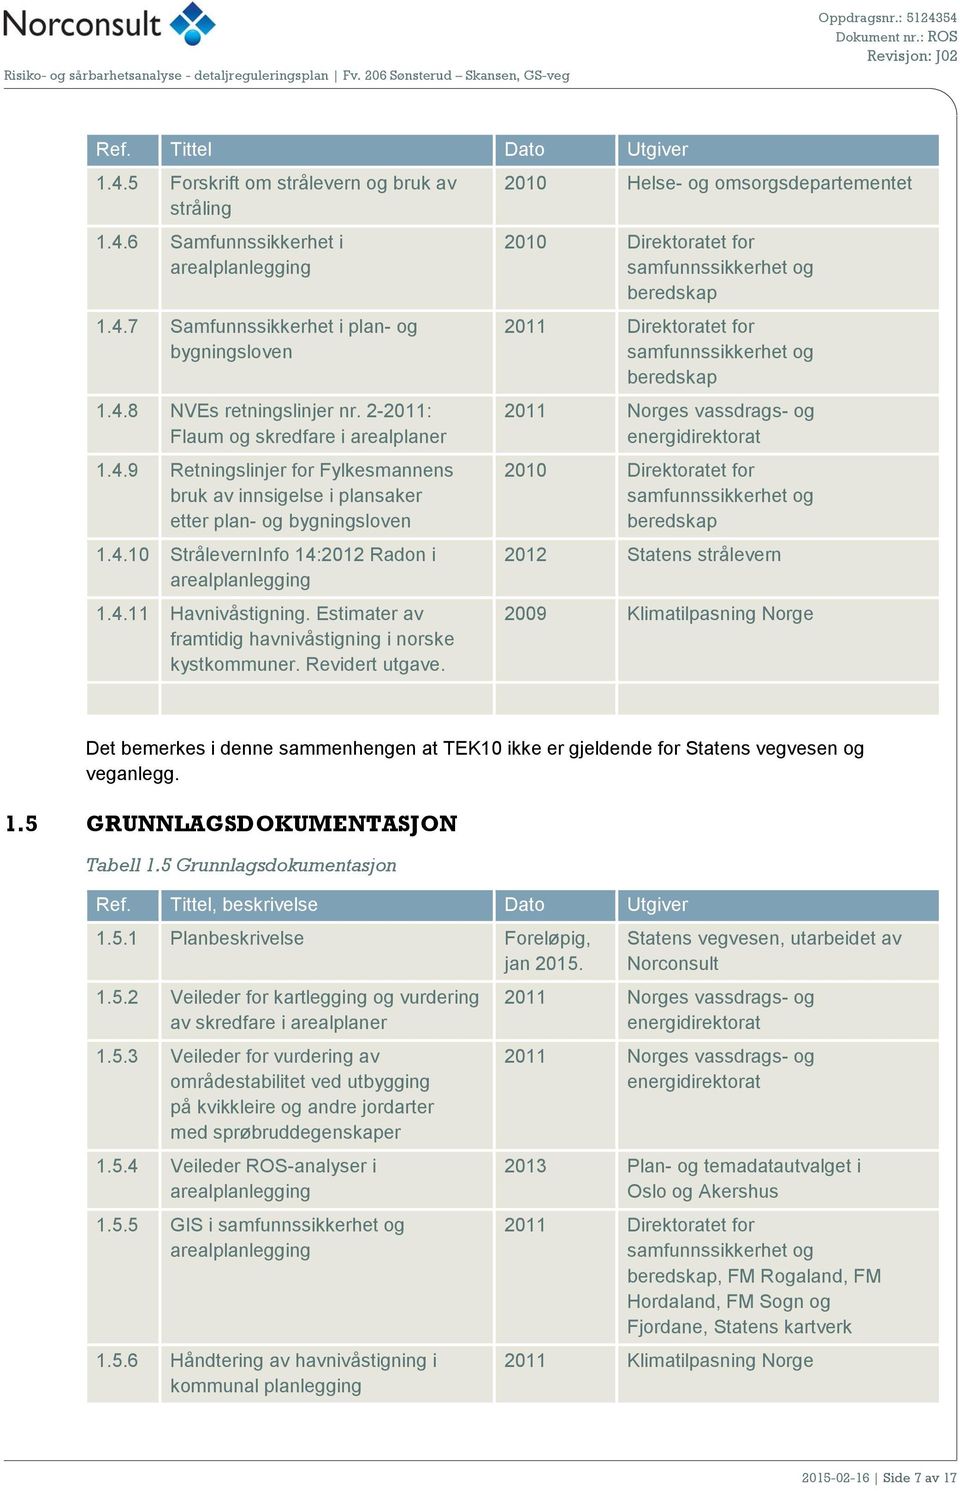 Estimater av framtidig havnivåstigning i norske kystkommuner. Revidert utgave.